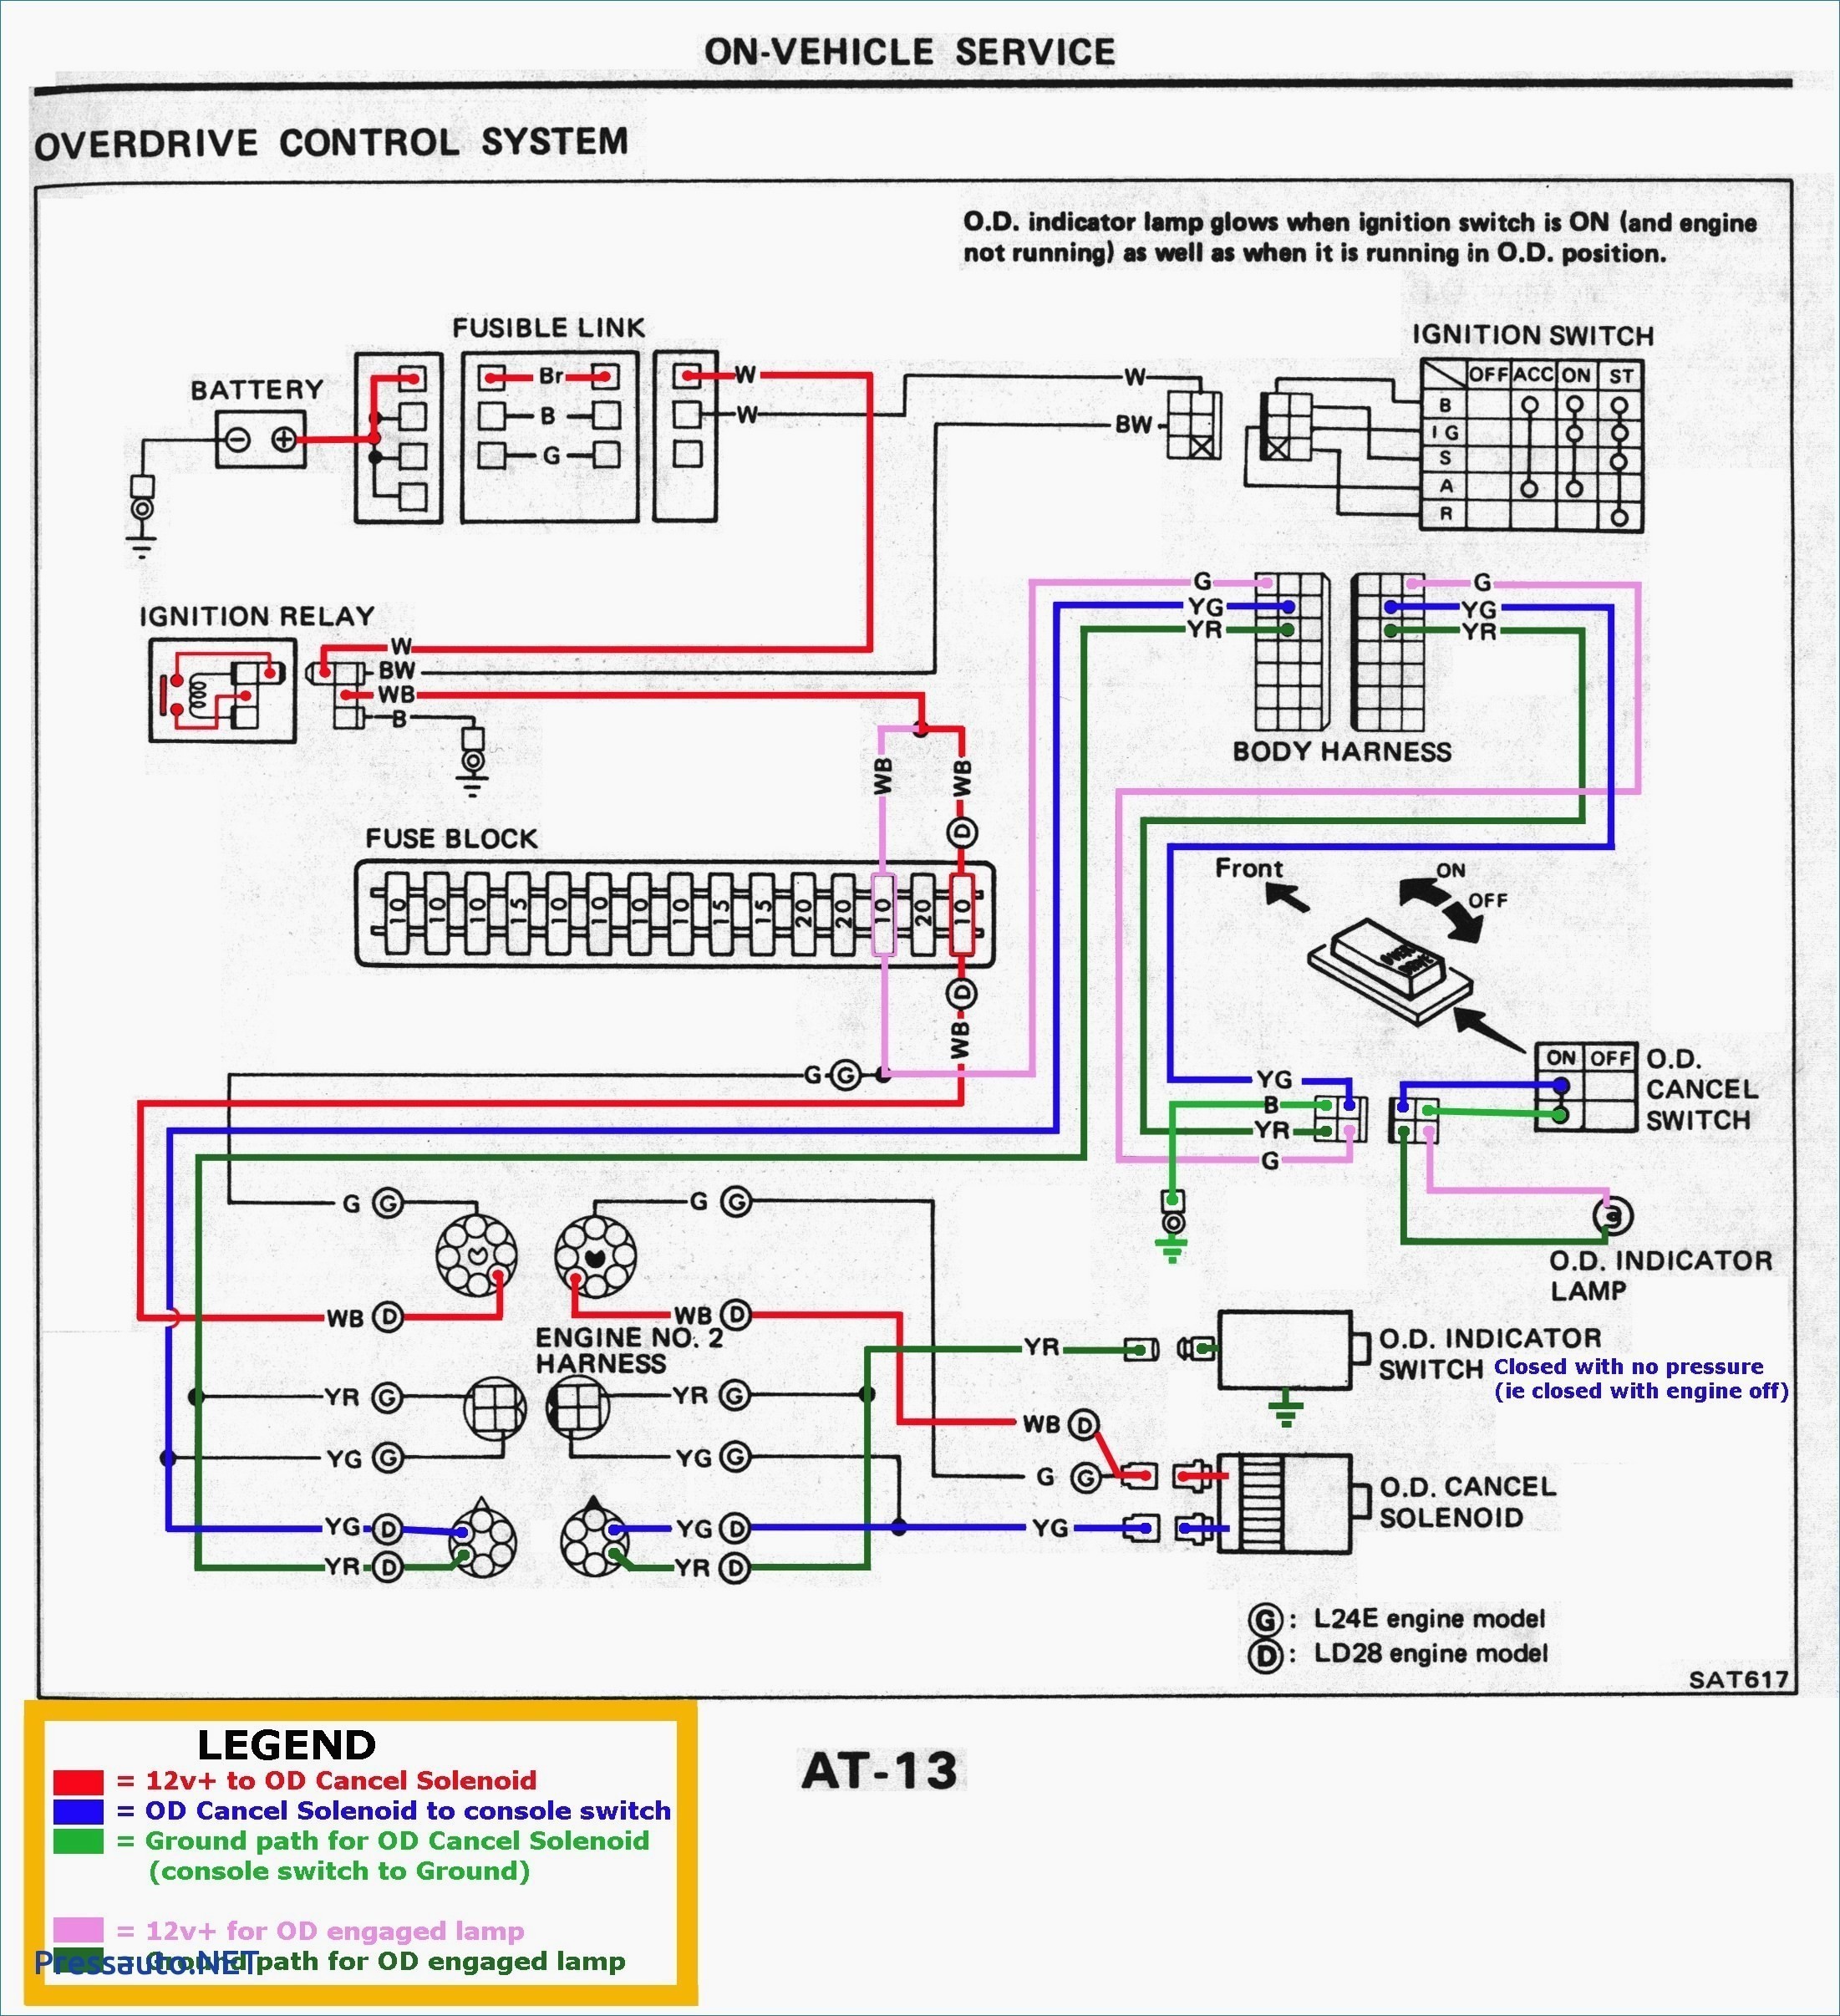 2002 Saturn Sl2 Engine Diagram 1995 Saturn Ignition Switch Wiring Diagram Worksheet and Wiring Of 2002 Saturn Sl2 Engine Diagram